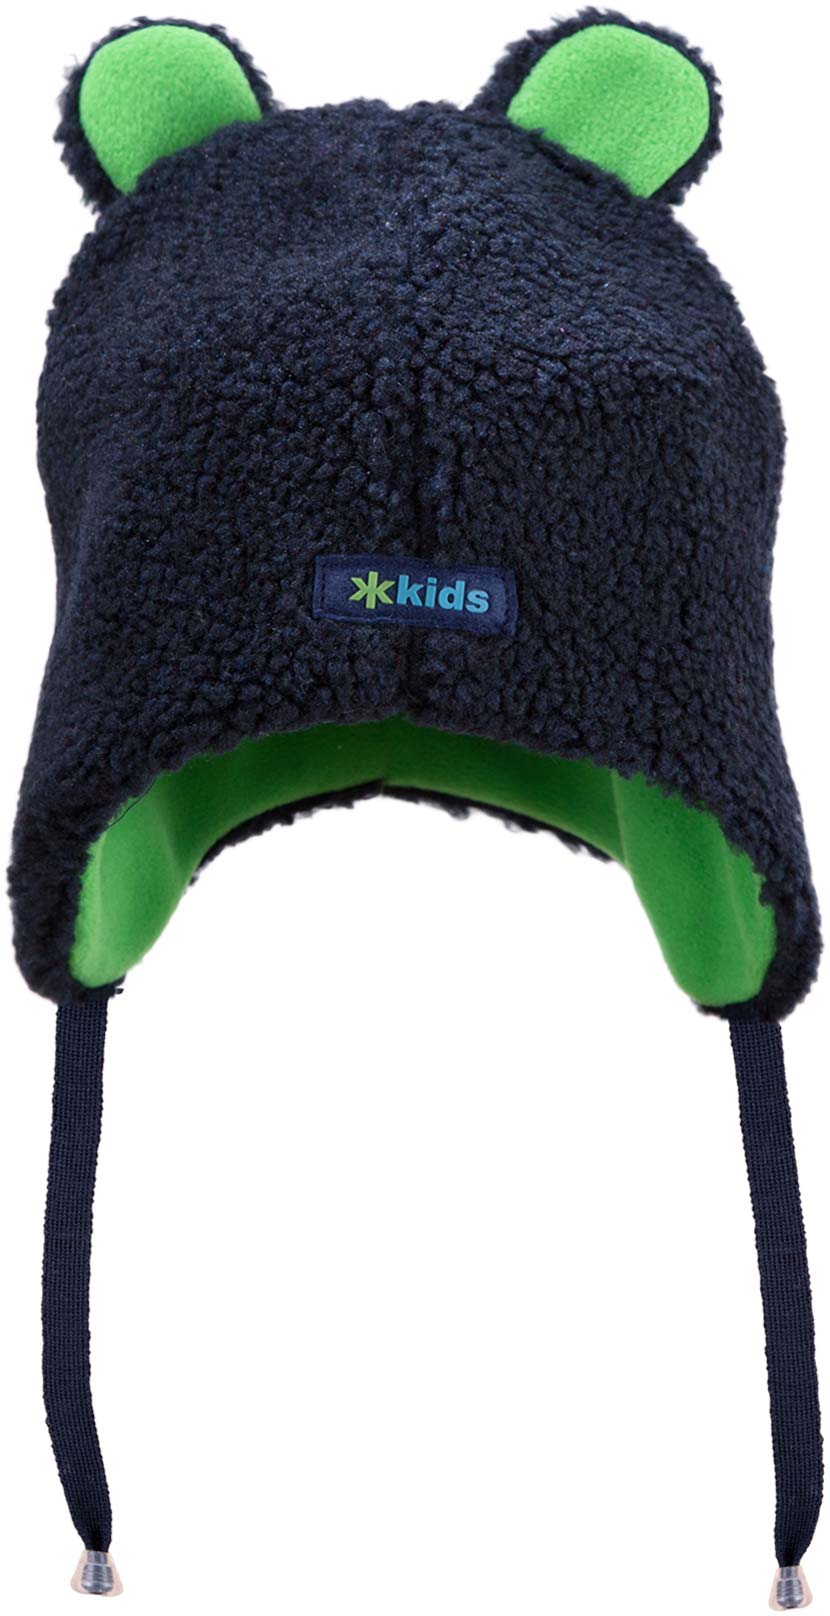 Kids’ fleece hat